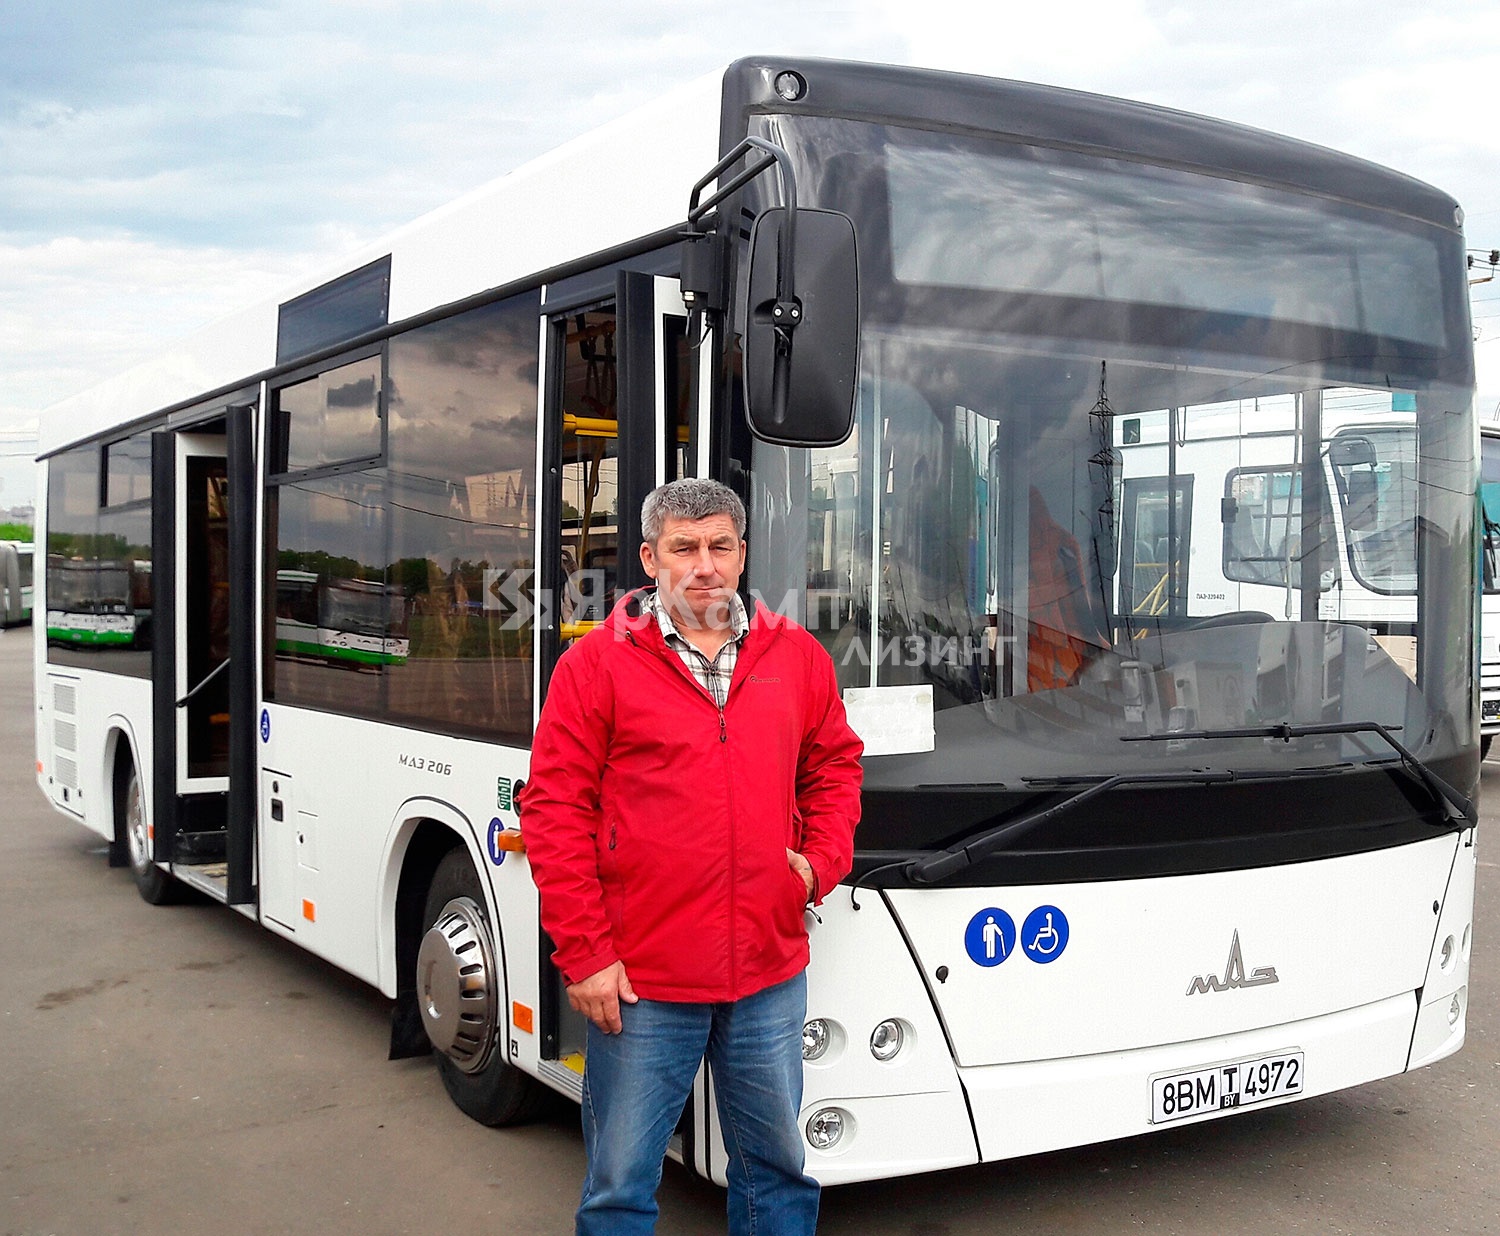 "ЯрКамп-Лизинг" произвел отгрузку на условиях лизинга двух автобусов МАЗ-206085